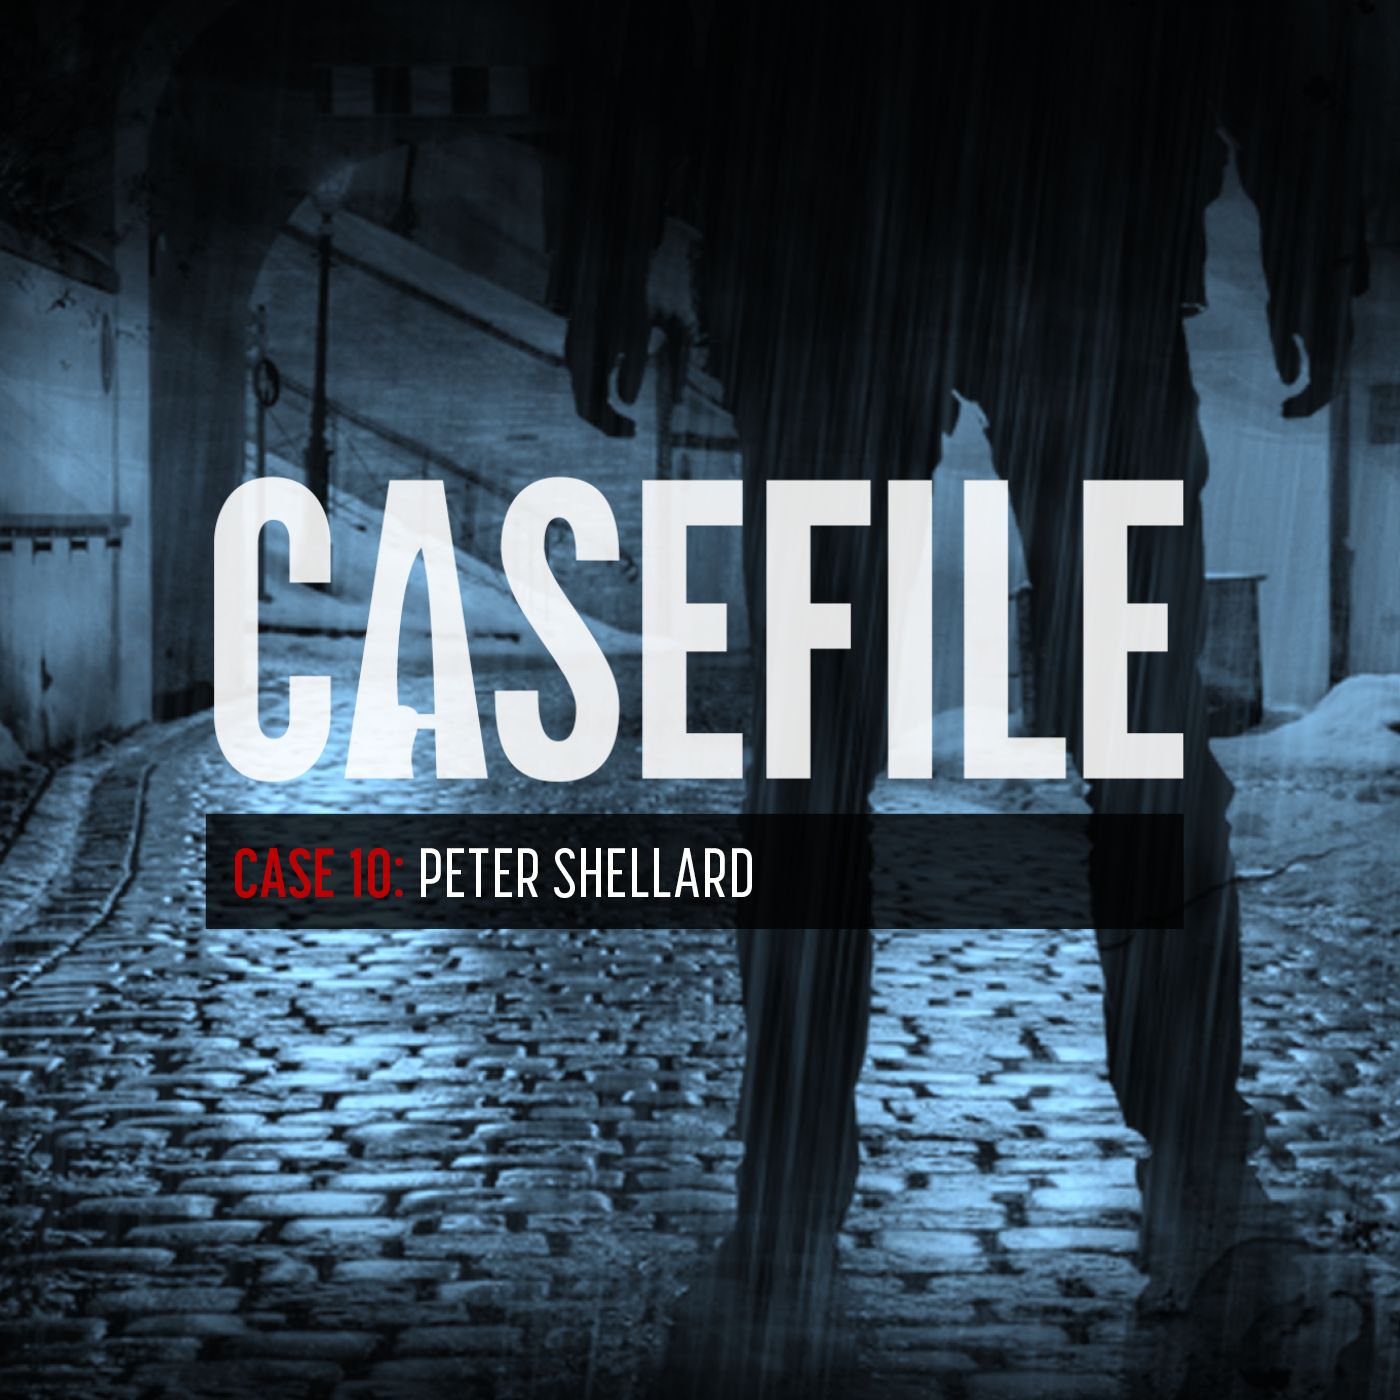 Case 10: Peter Shellard